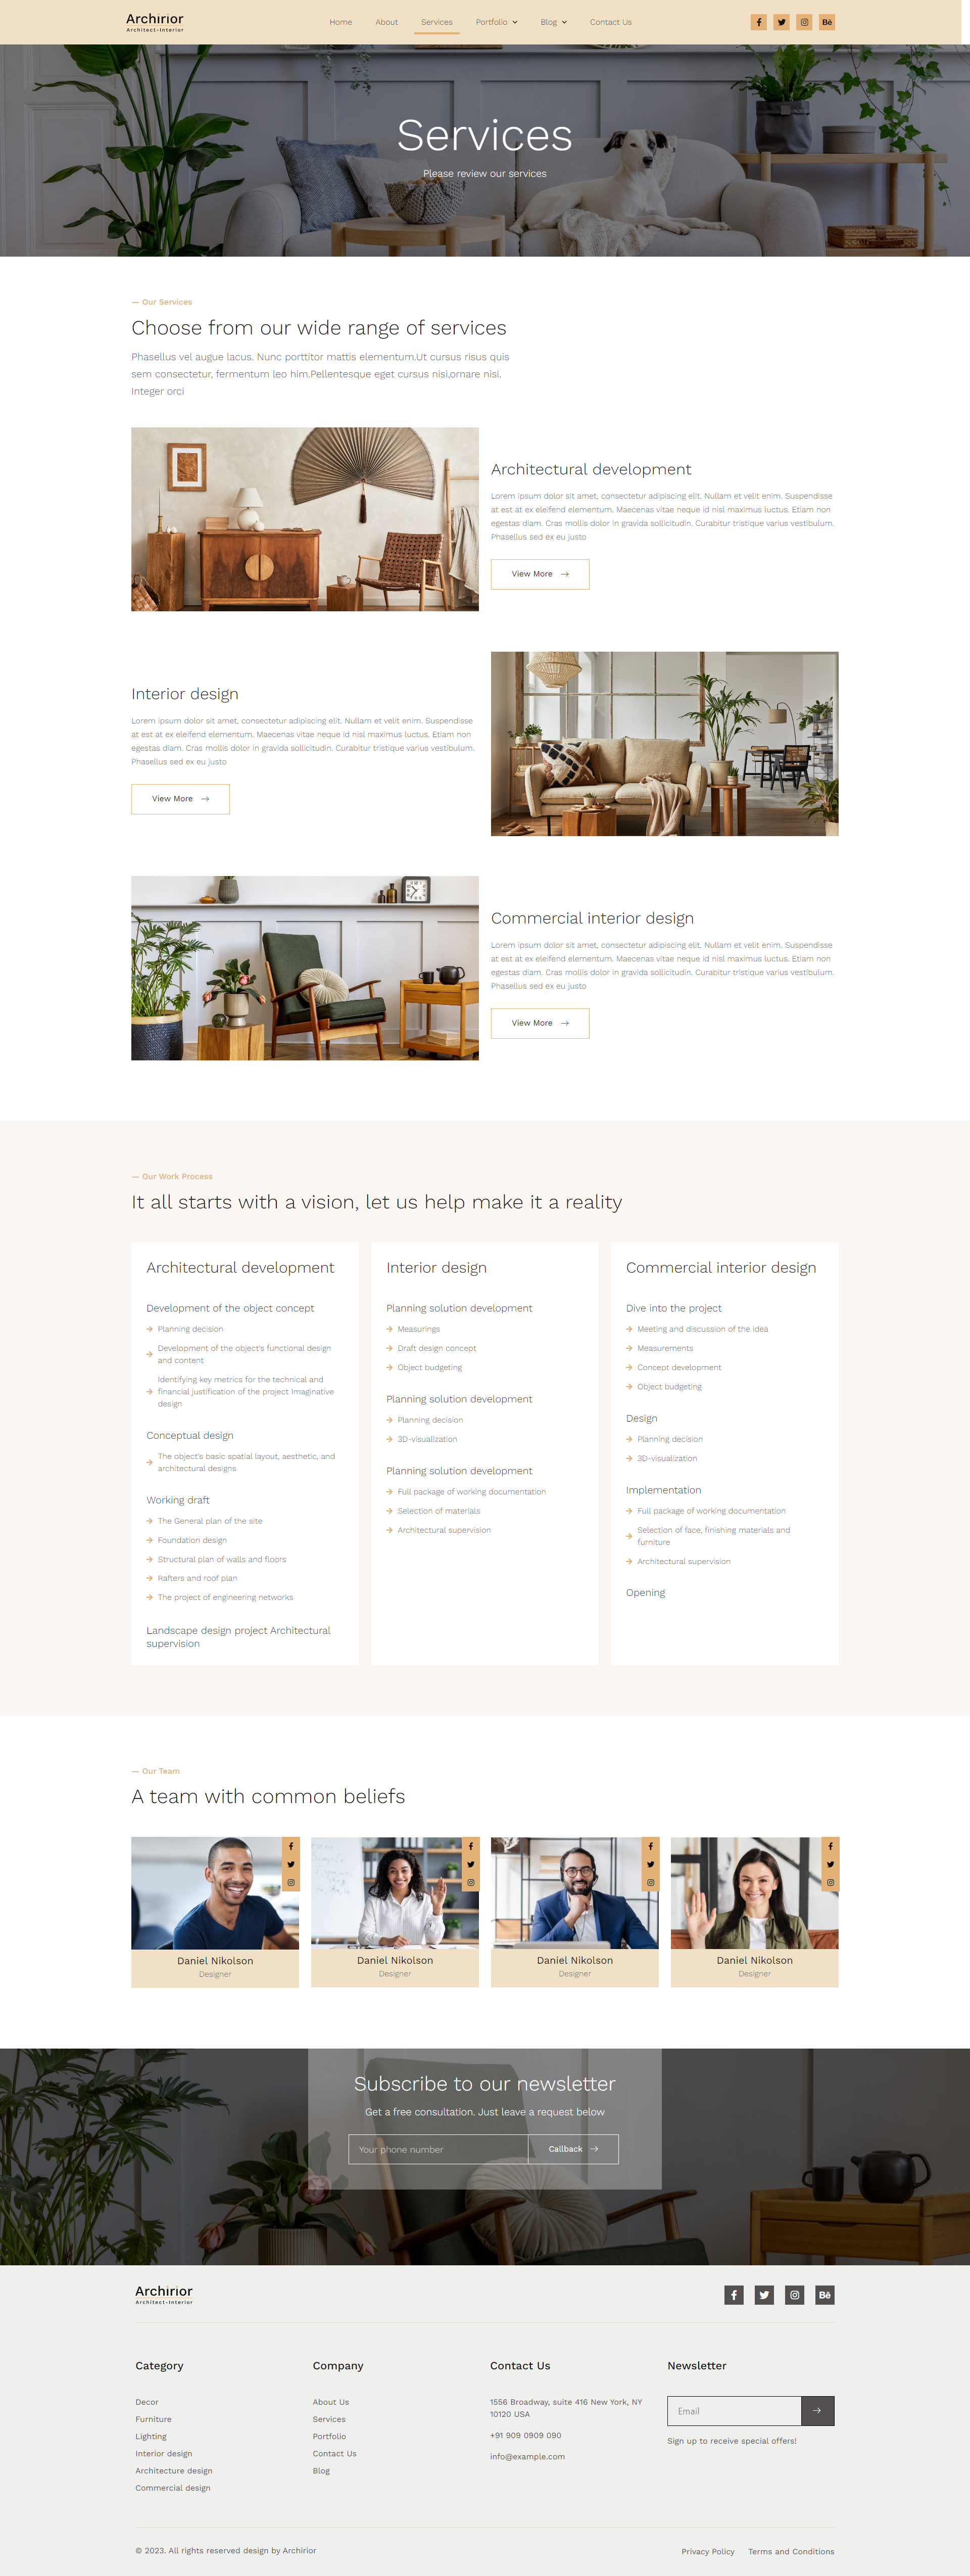 Archirior - Architecture Template & Interior Design Elementor Template kit